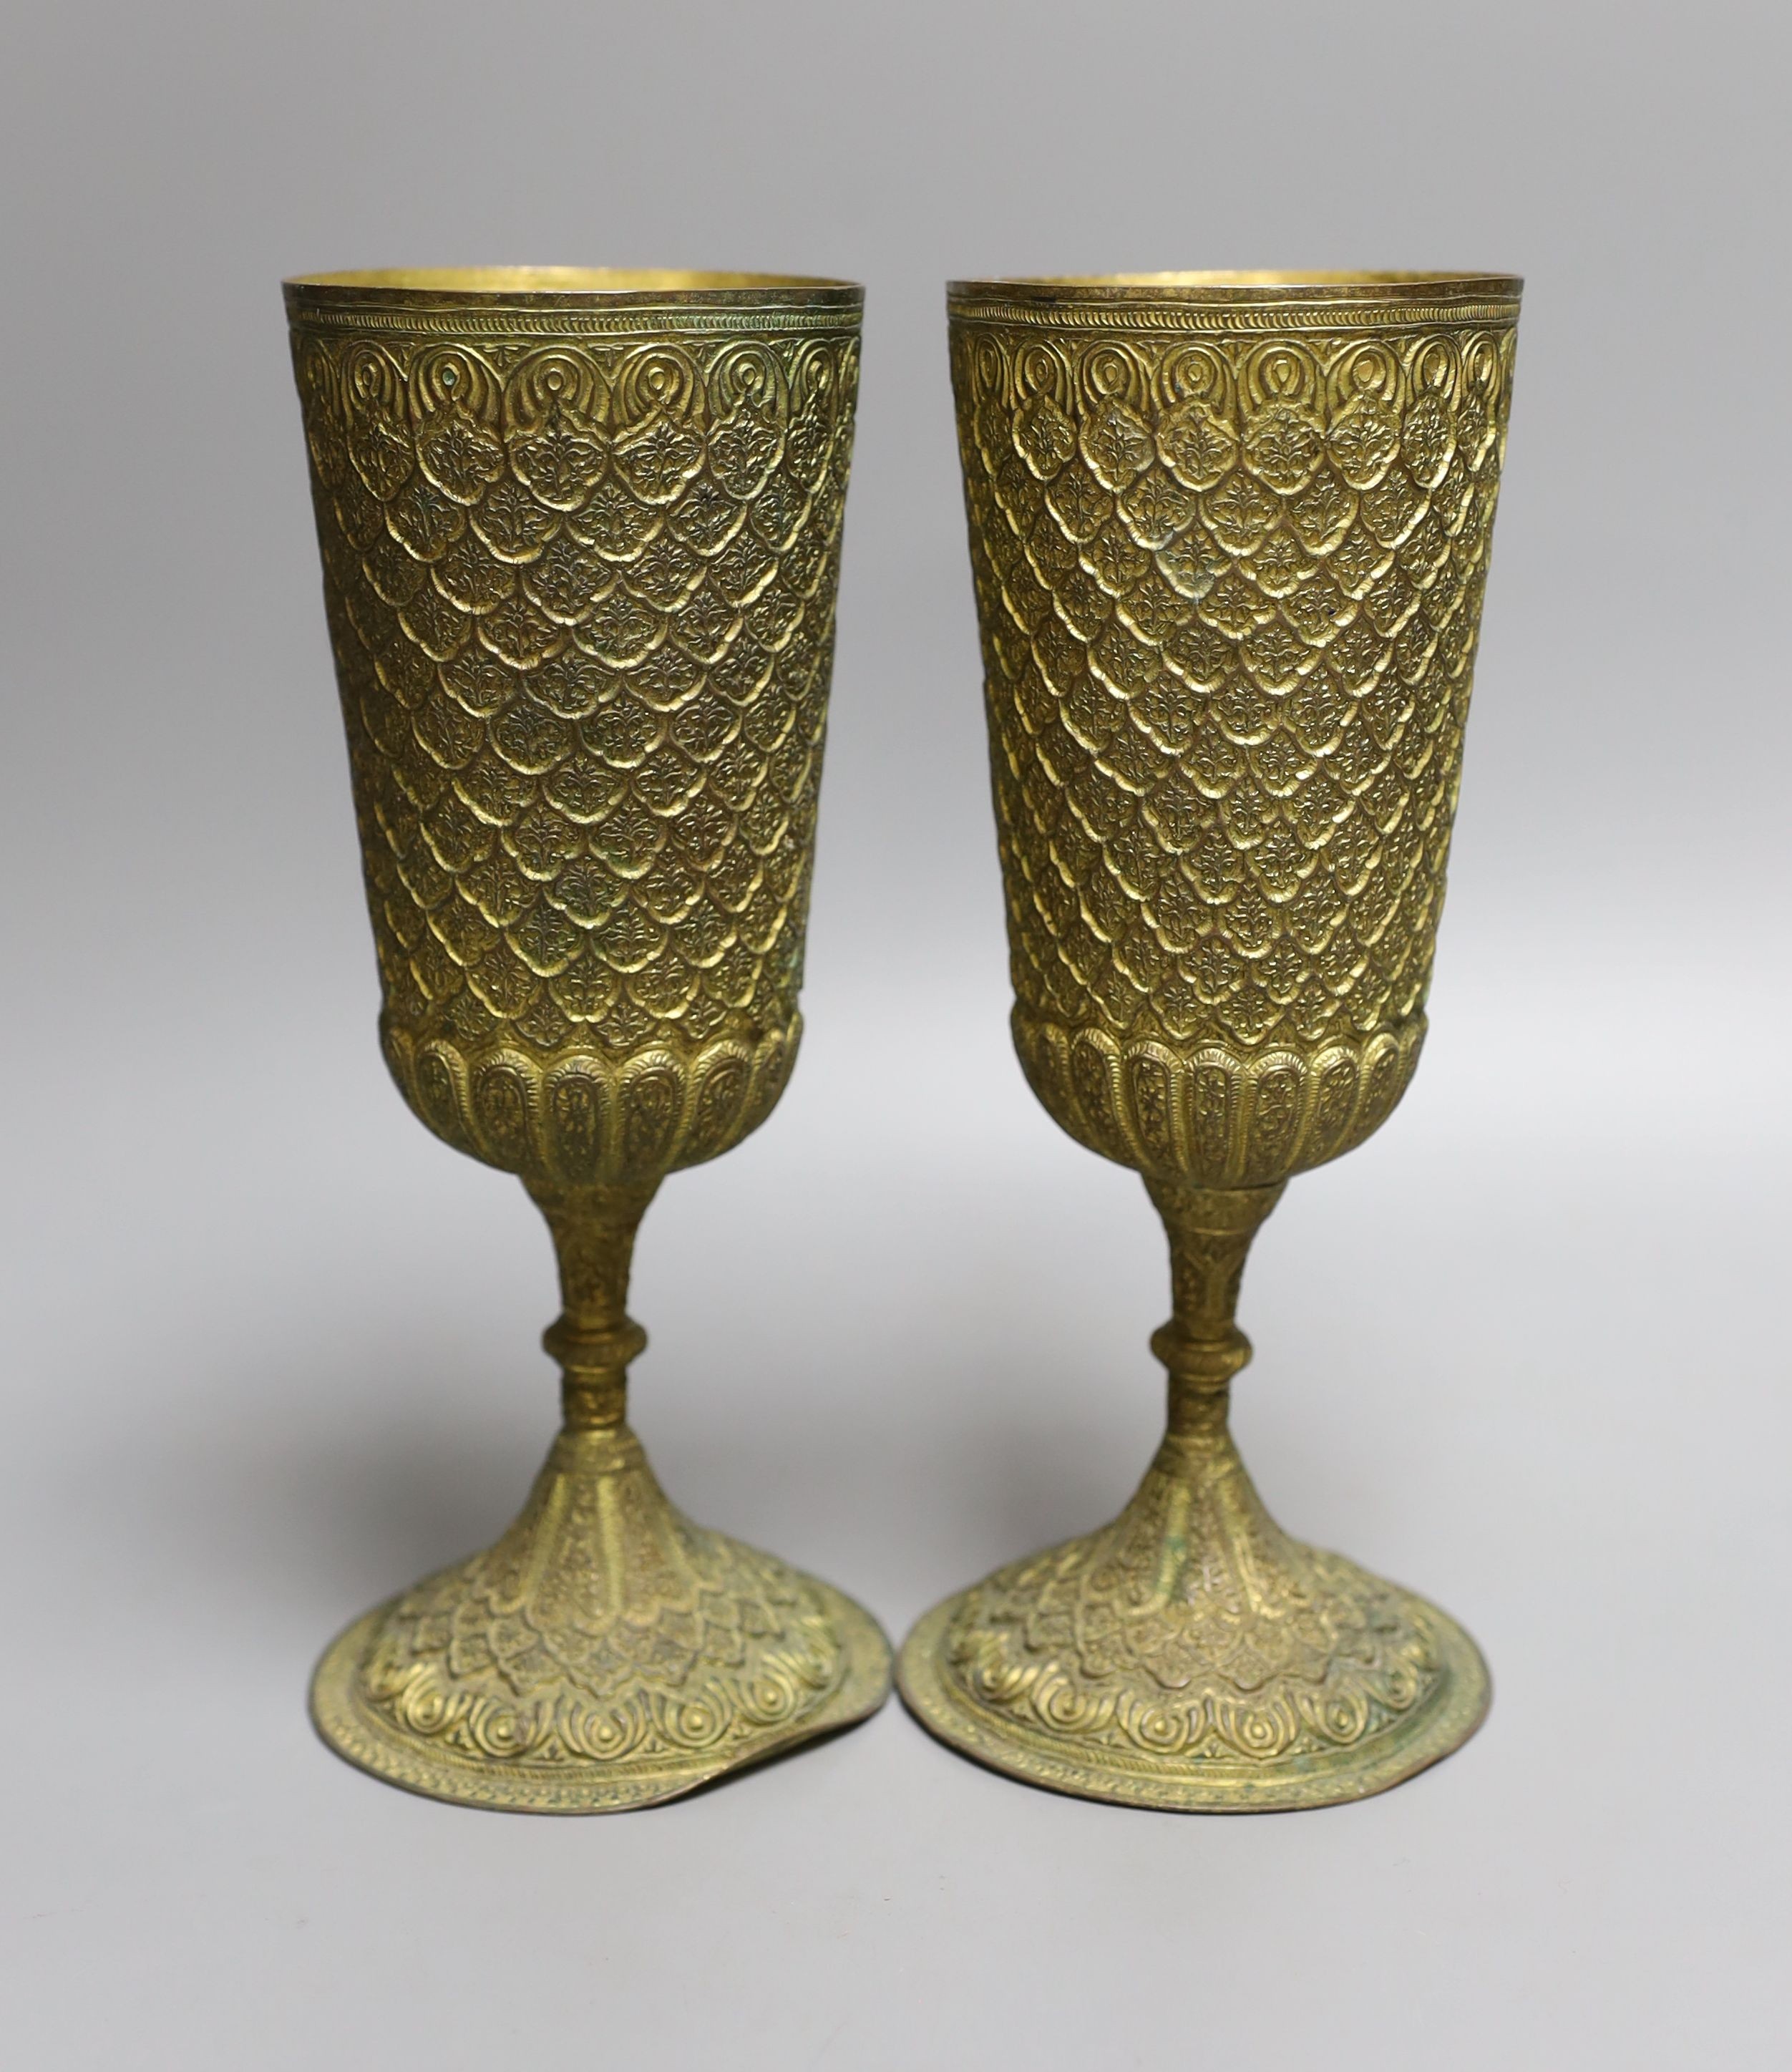 A pair of ornate gilt metal goblets,22cms high.